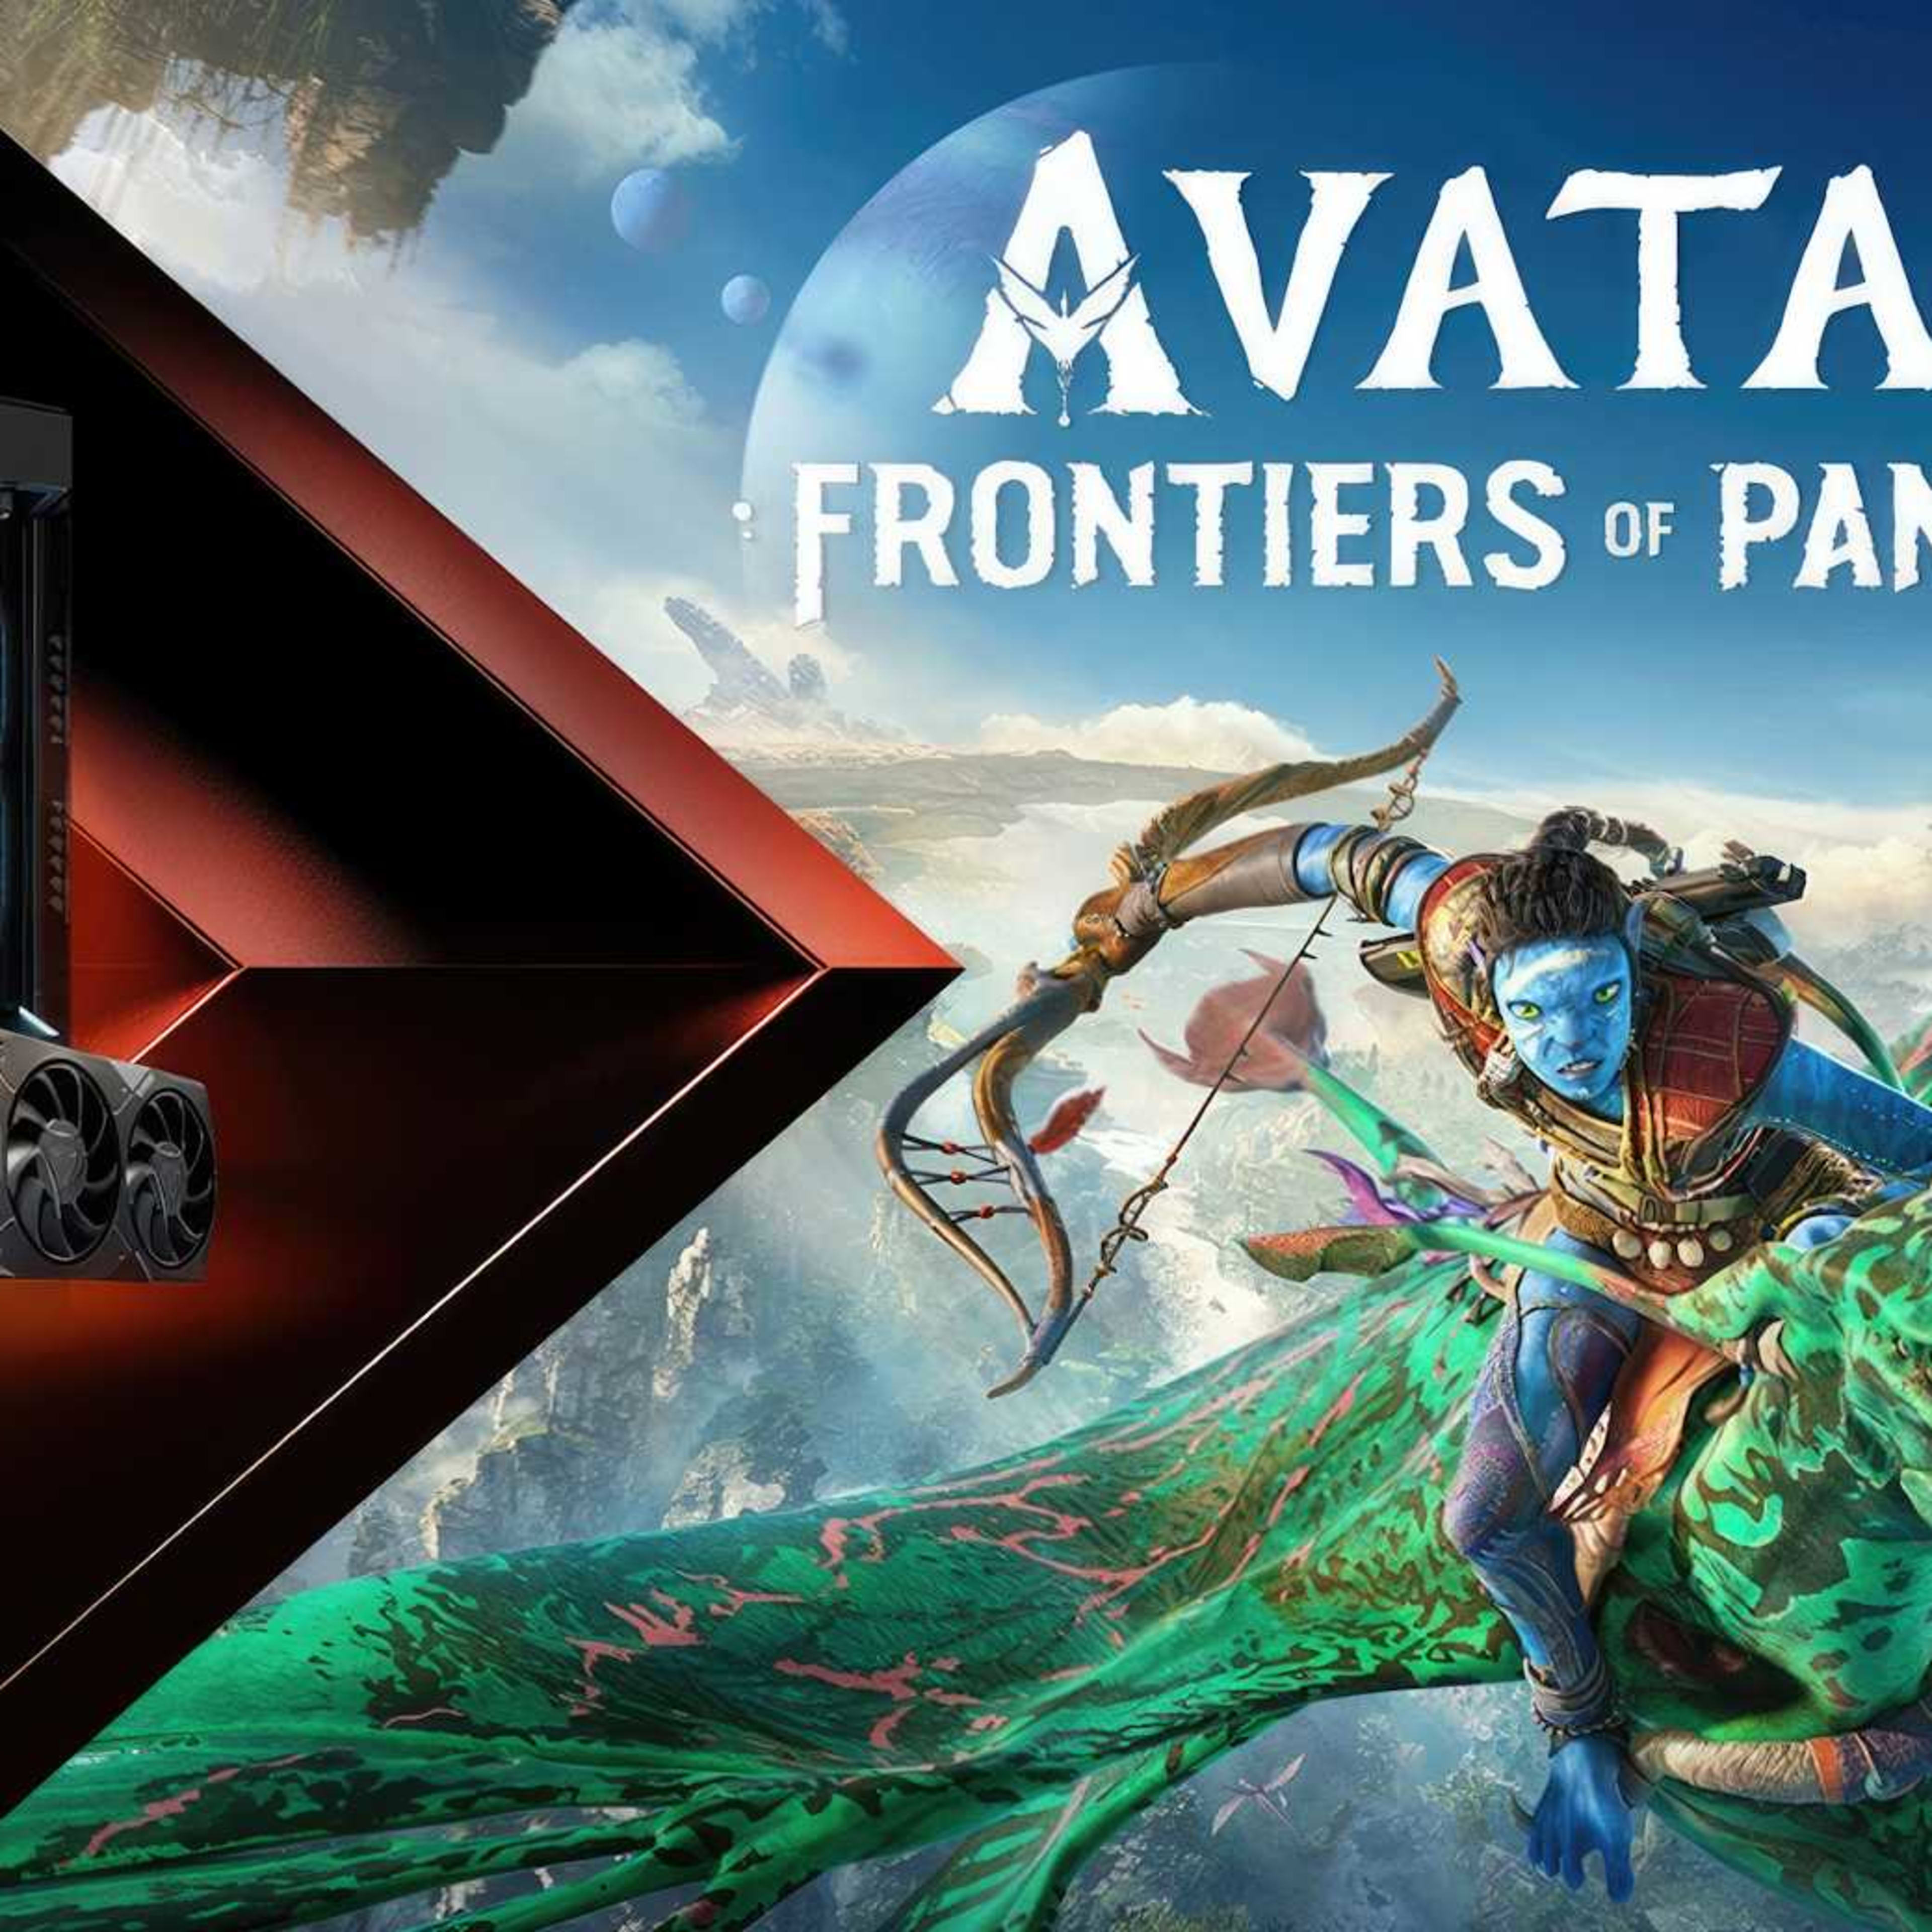 Avatar: Frontiers of Pandora Digital Download (AMD 7000 Series Ryzen 9/7800X3D CPU Required)